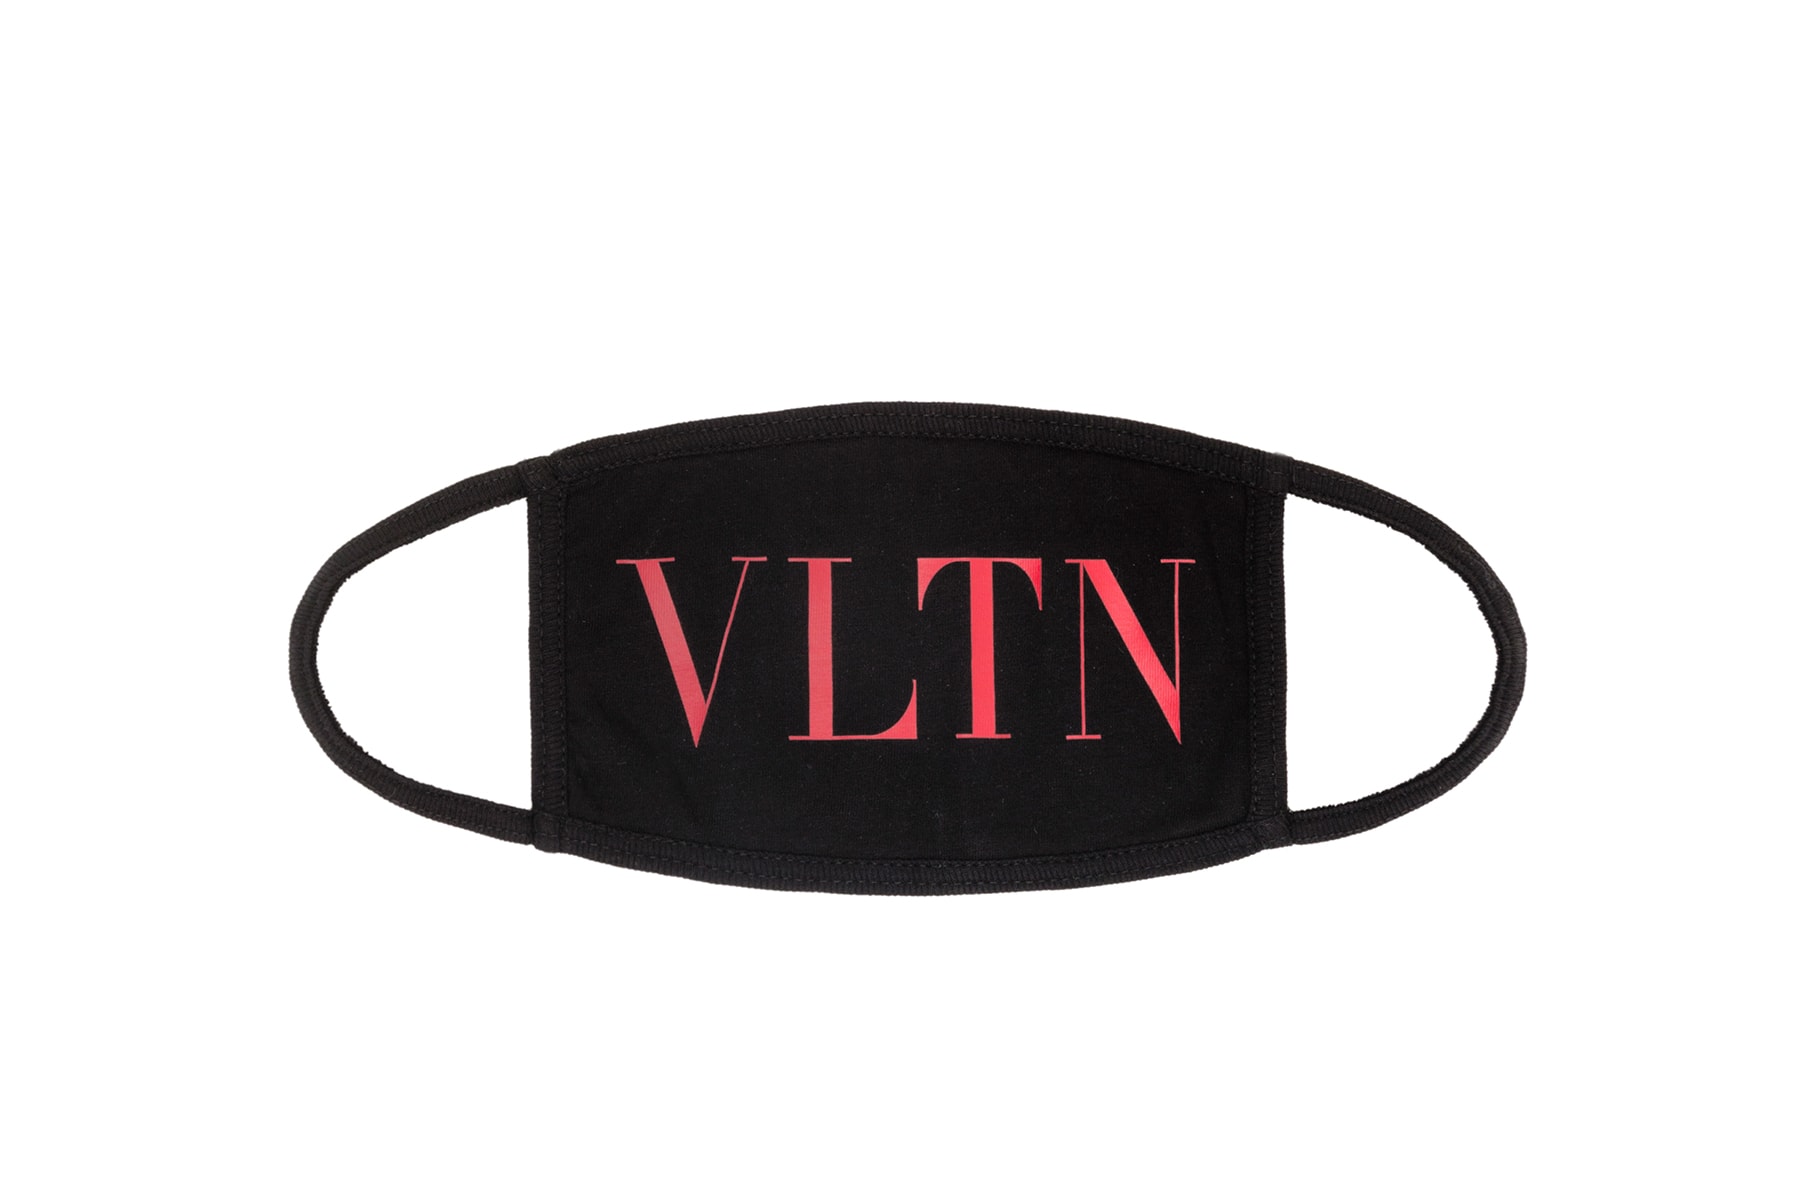 Valentino 2019年プレタポルテコレクションの東京開催を記念した “VLTN” 限定カプセルコレクション  『GINZA SIX』内のフラッグシップストアにて店頭販売される主役級アイテムと粋なガジェット群をチェック 